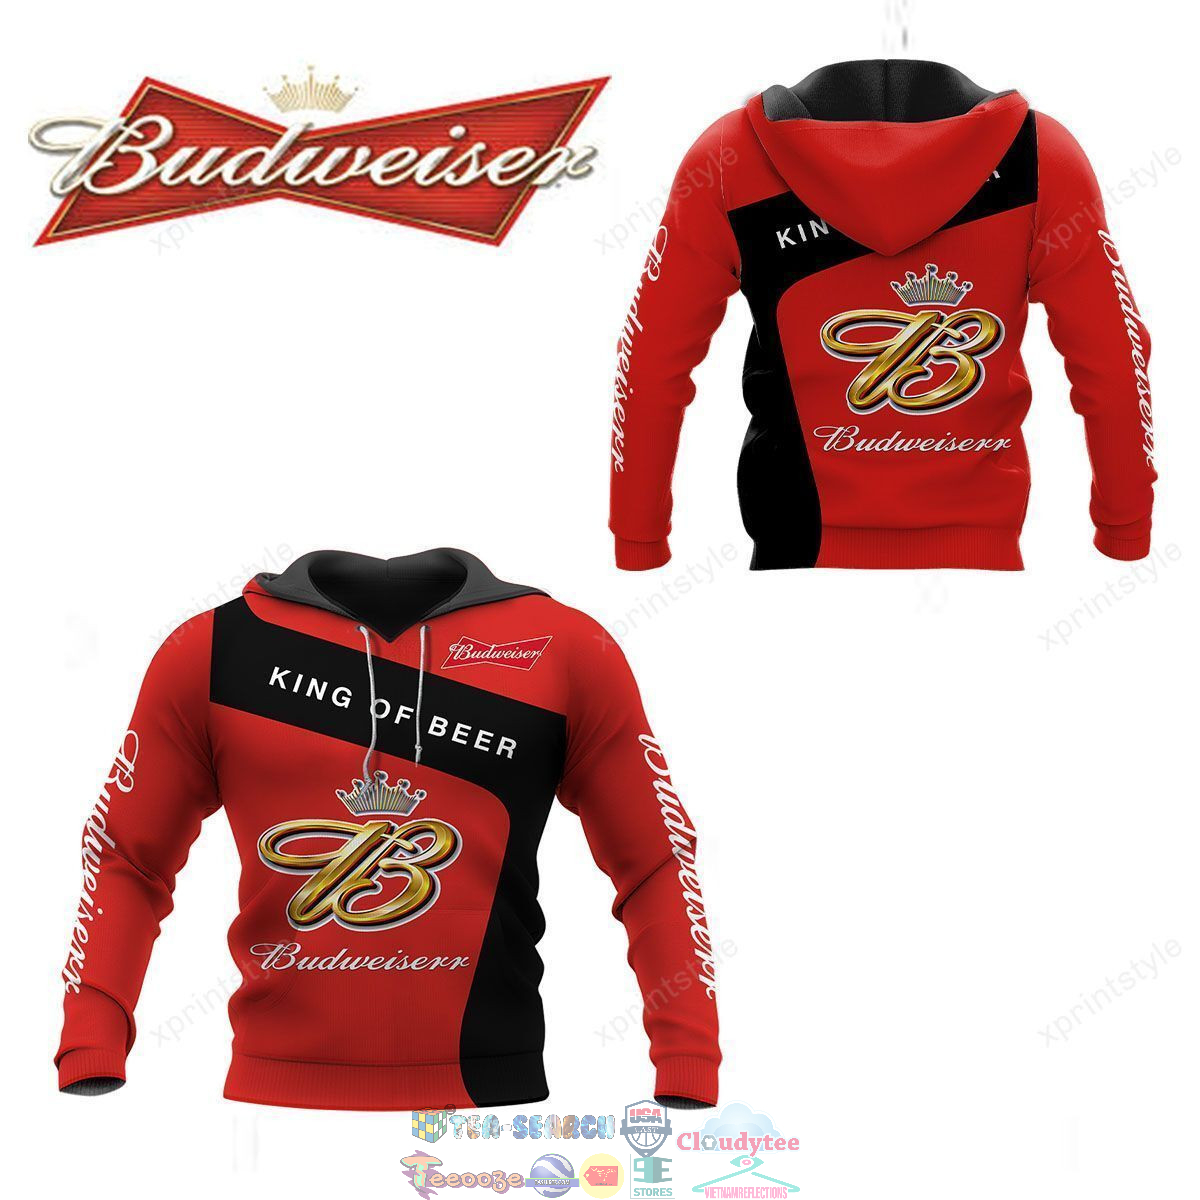 Budweiser Beer ver 3 3D hoodie and t-shirt – Saleoff